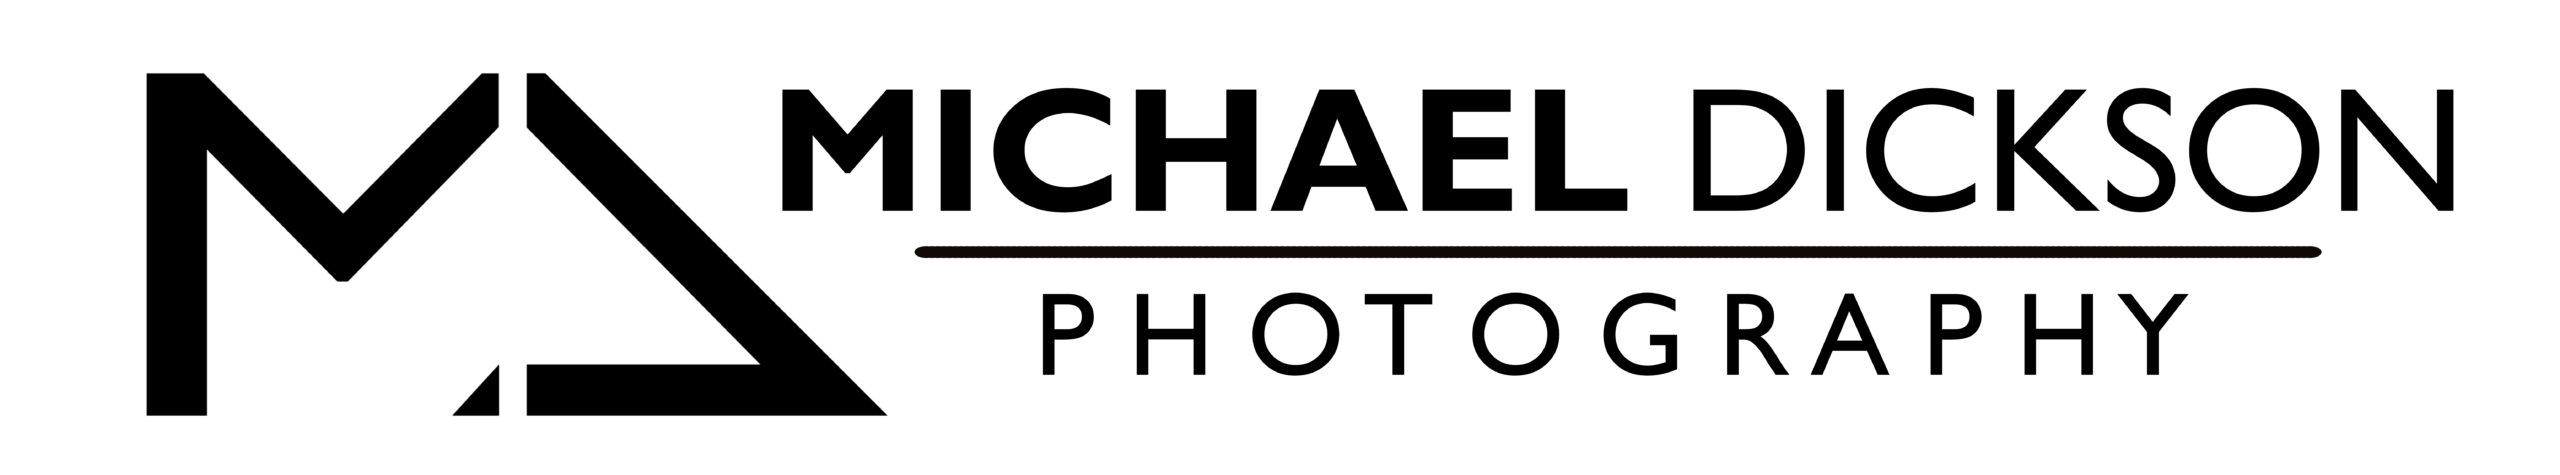 Michael Dickson Photography